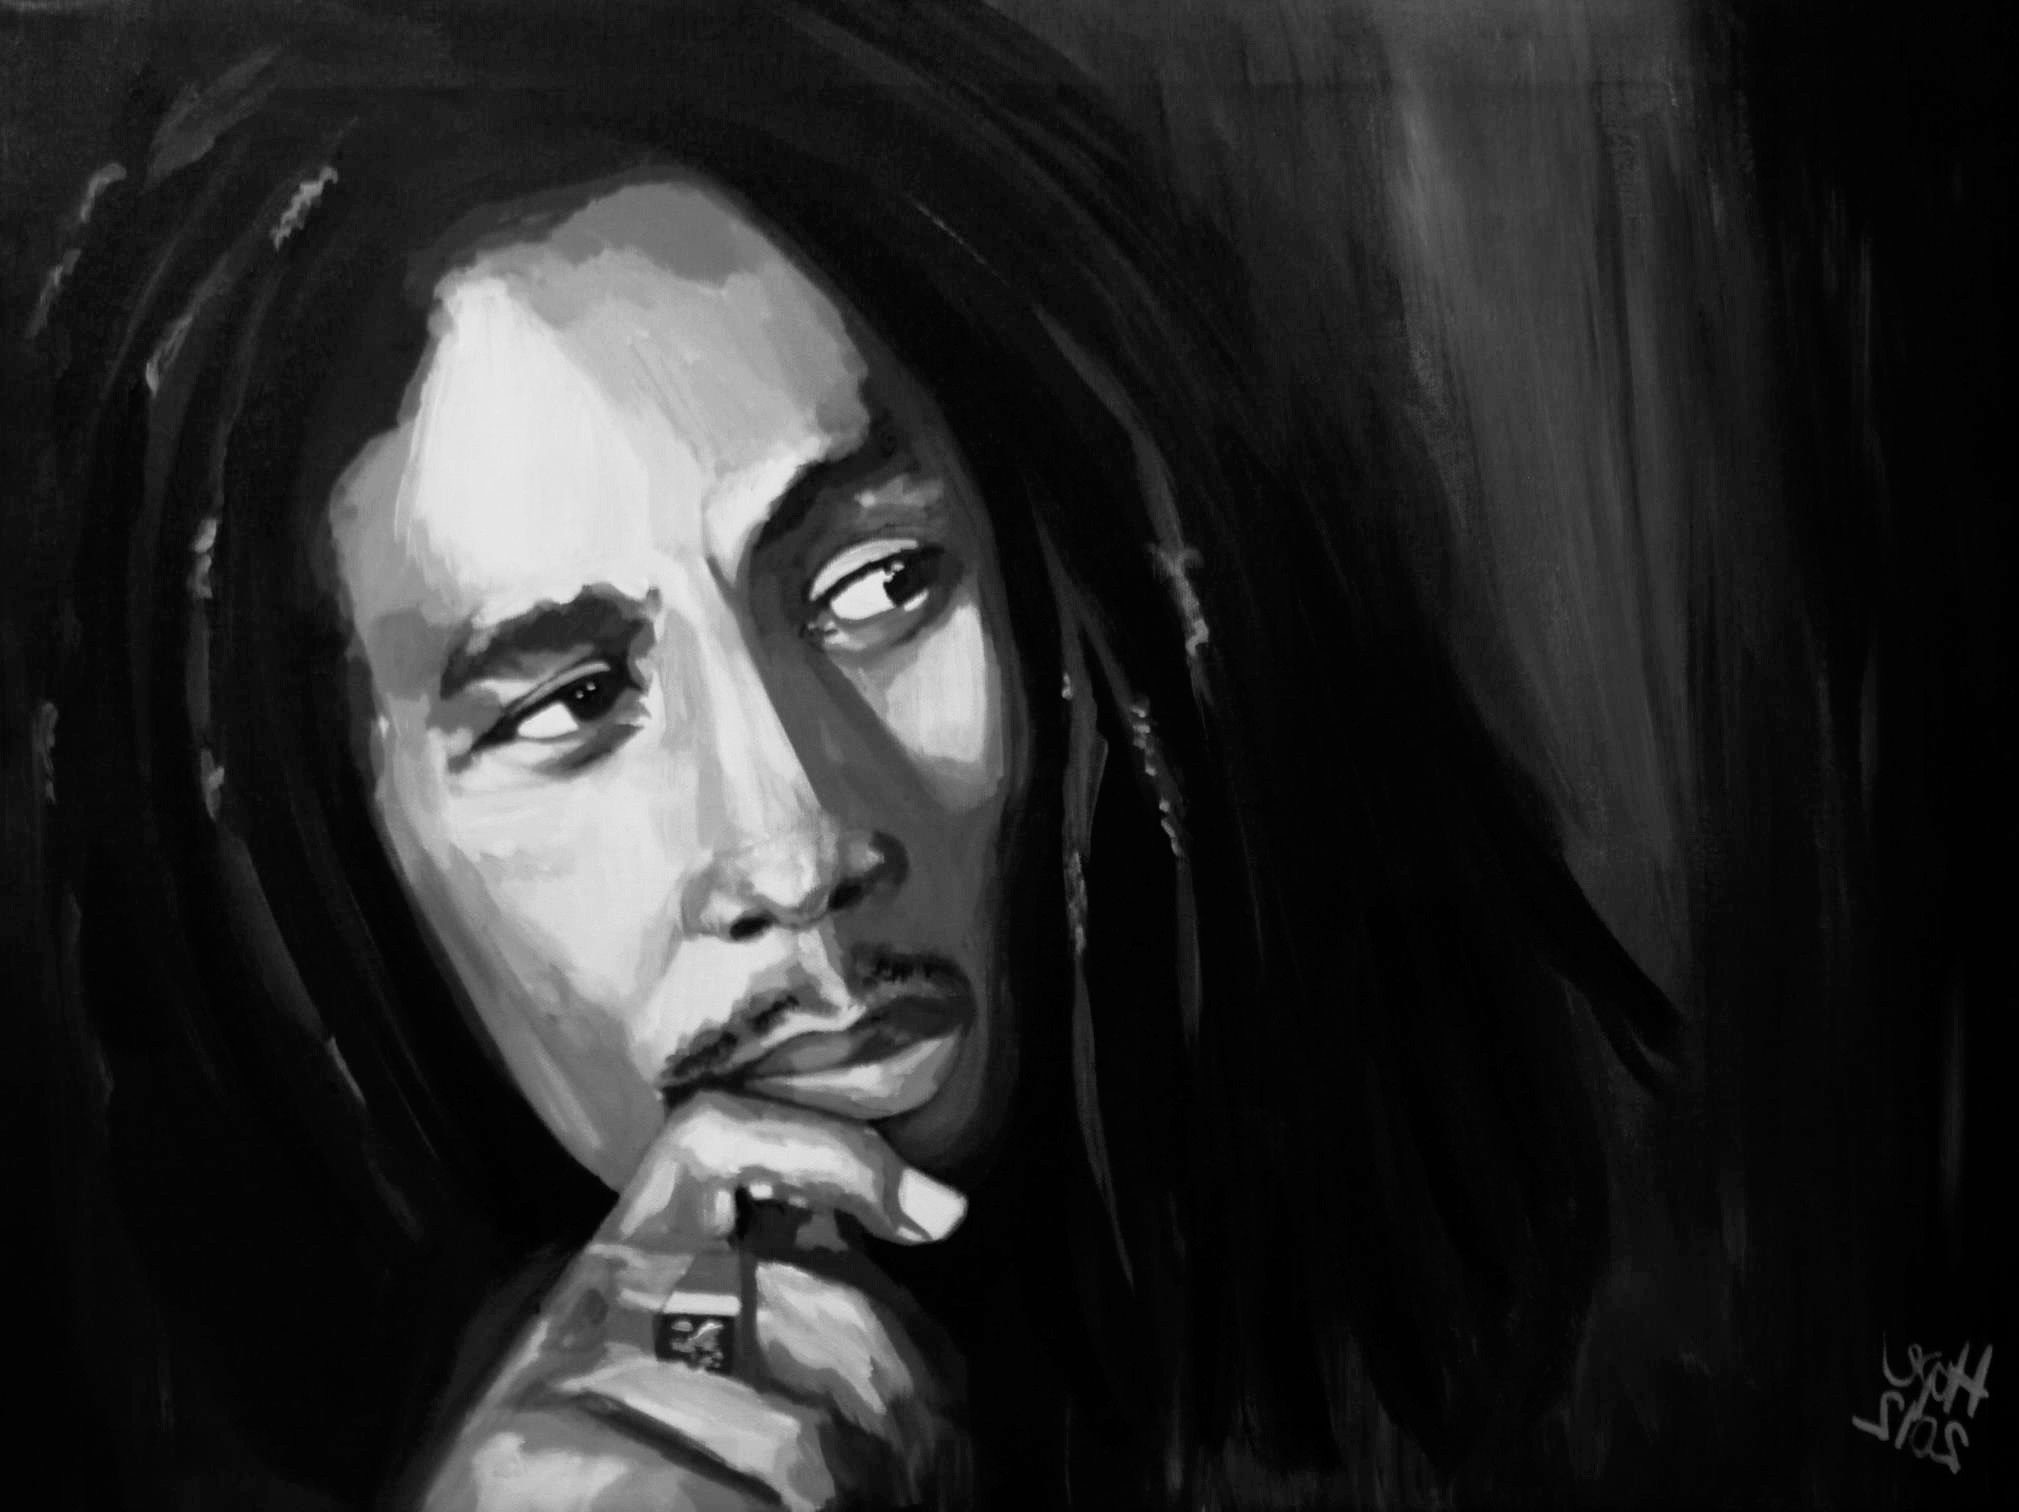 2019x1512 Bob Marley Desktop Wallpapers, Bob Marley Backgrounds.  0.138 MB